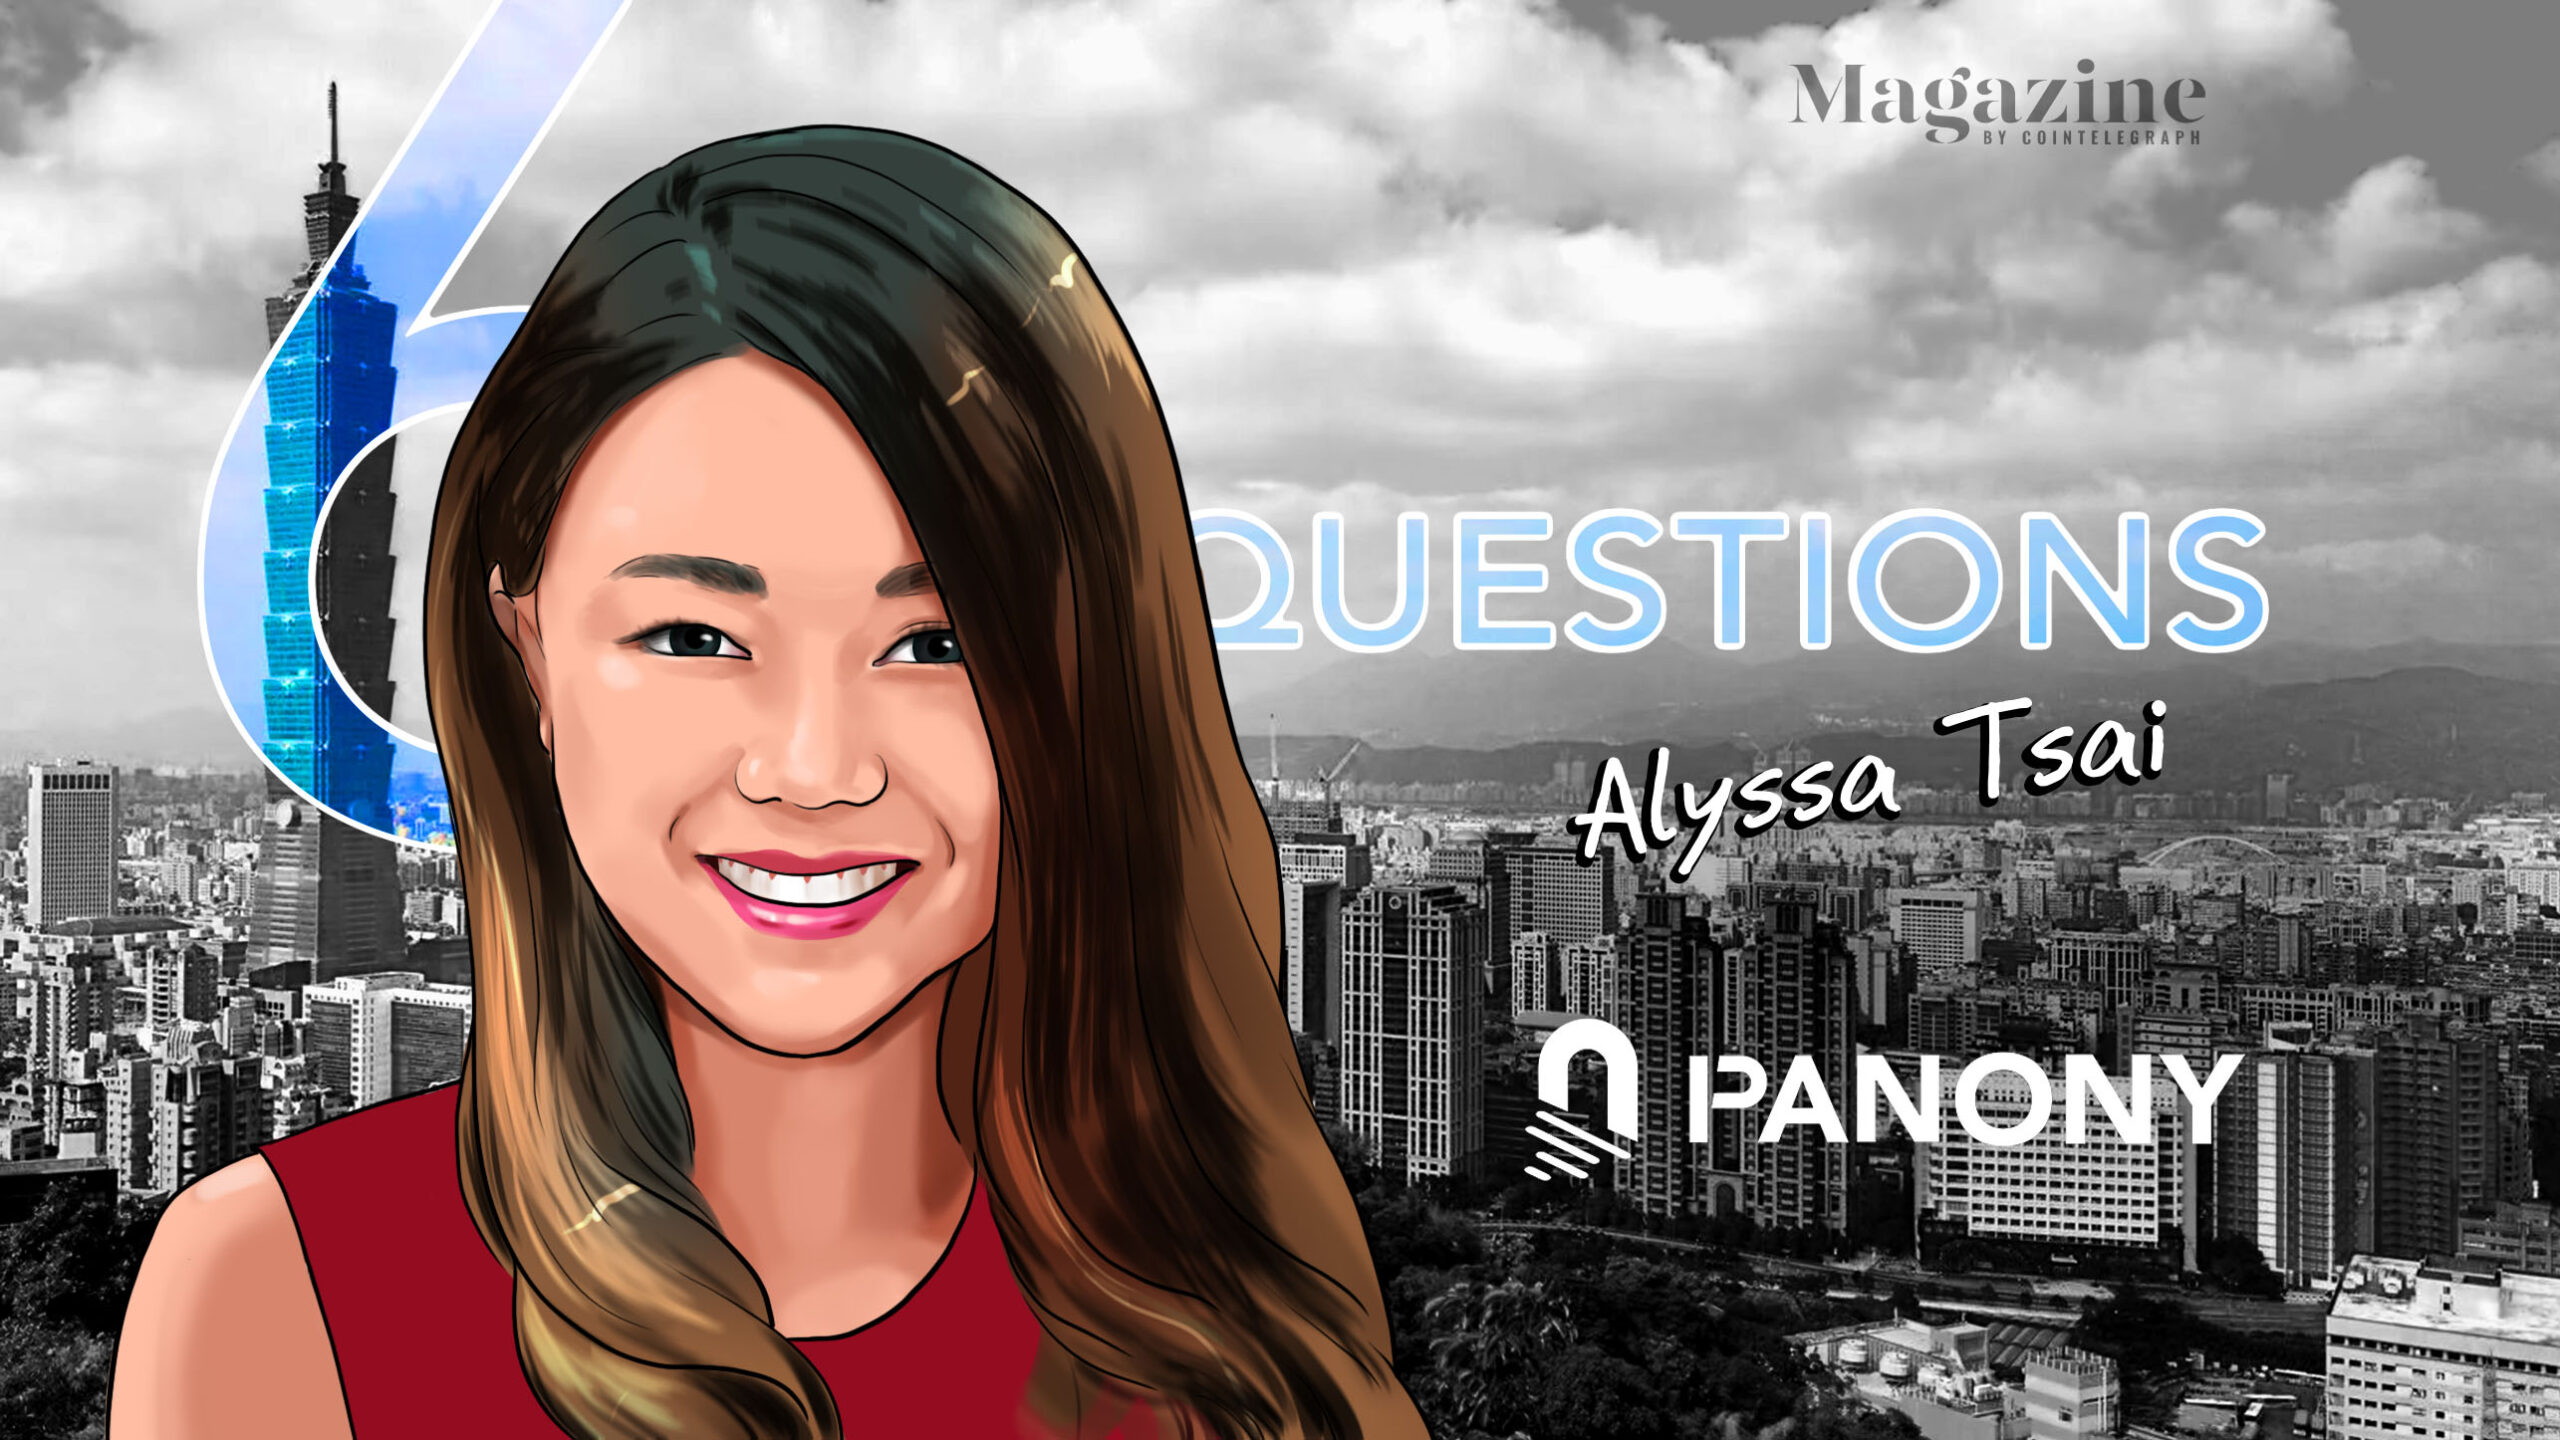 6-questions-for-alyssa-tsai-of-panony